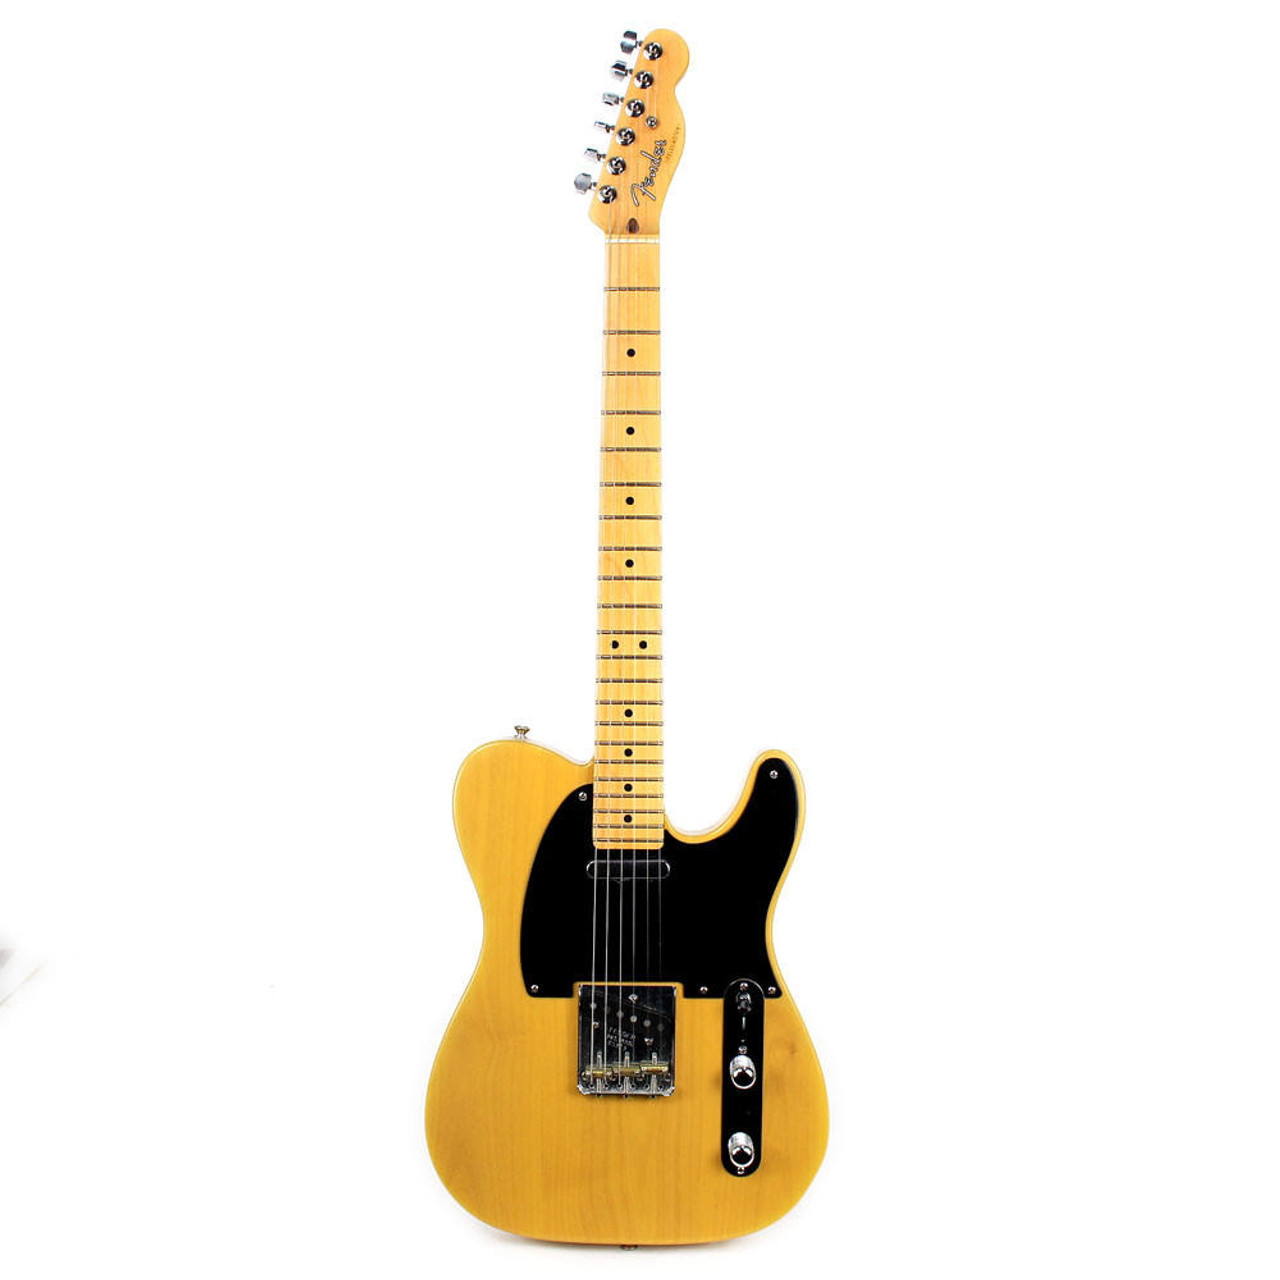 2007 Fender USA Made Highway One Telecaster Electric Guitar